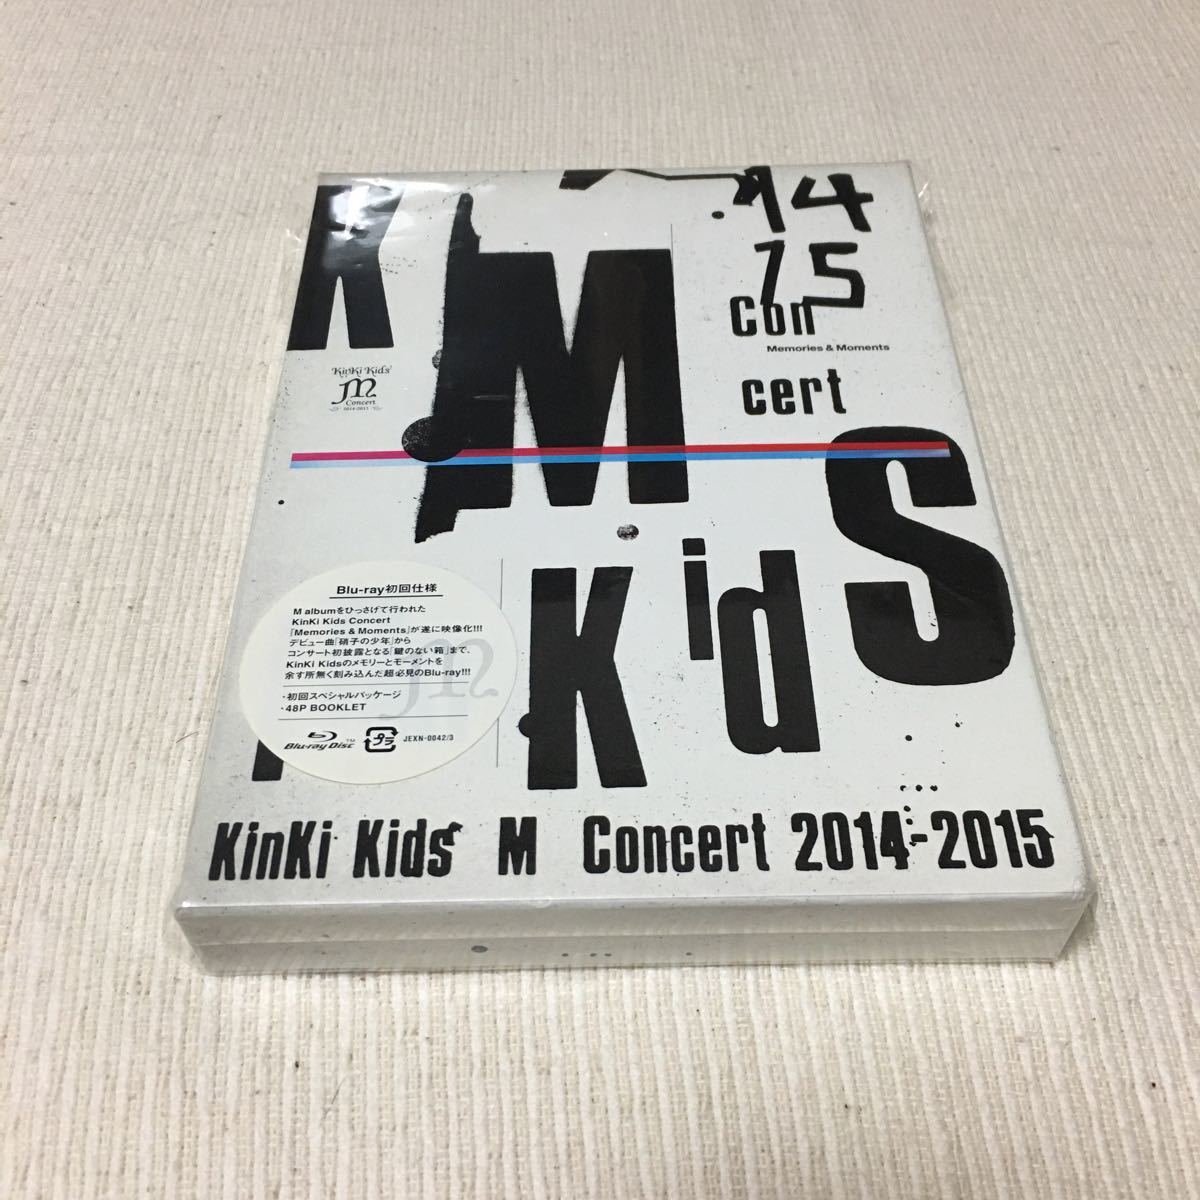 KinKi KidsBlu-ray 初回盤「KinKi Kids Concert Memories ＆ Moments